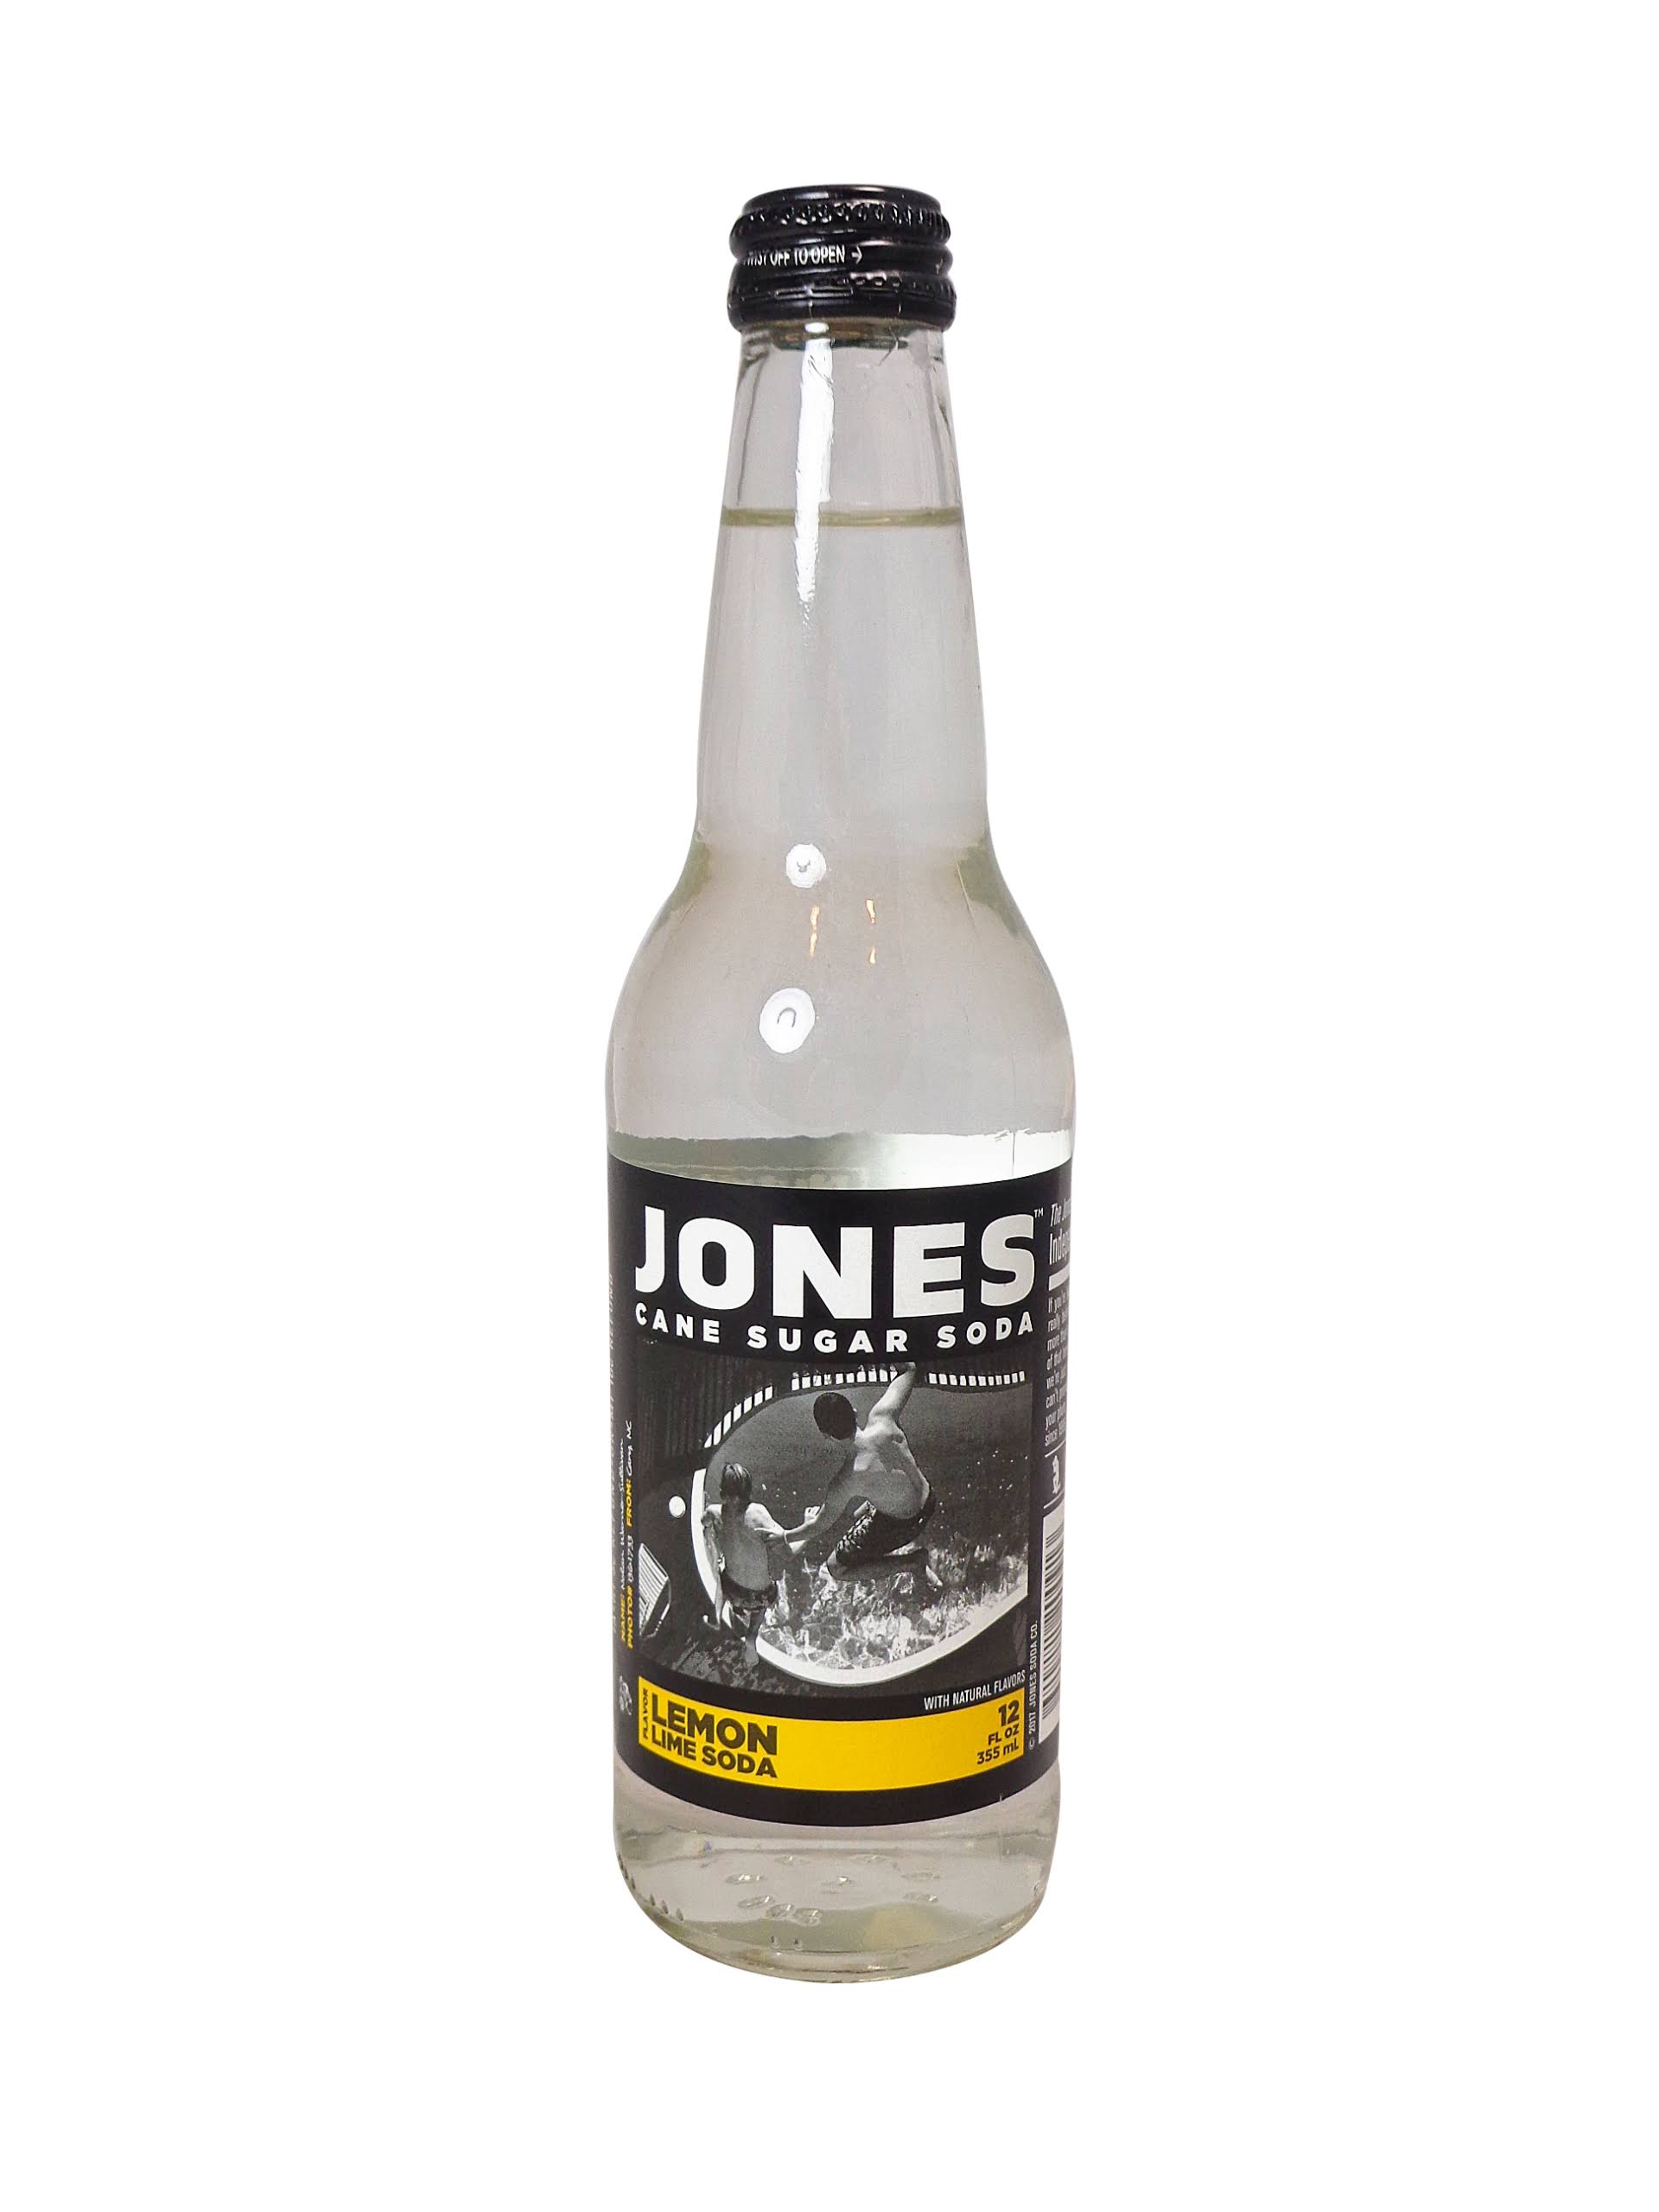 Jones Soda - Lemon Lime, 12 oz.